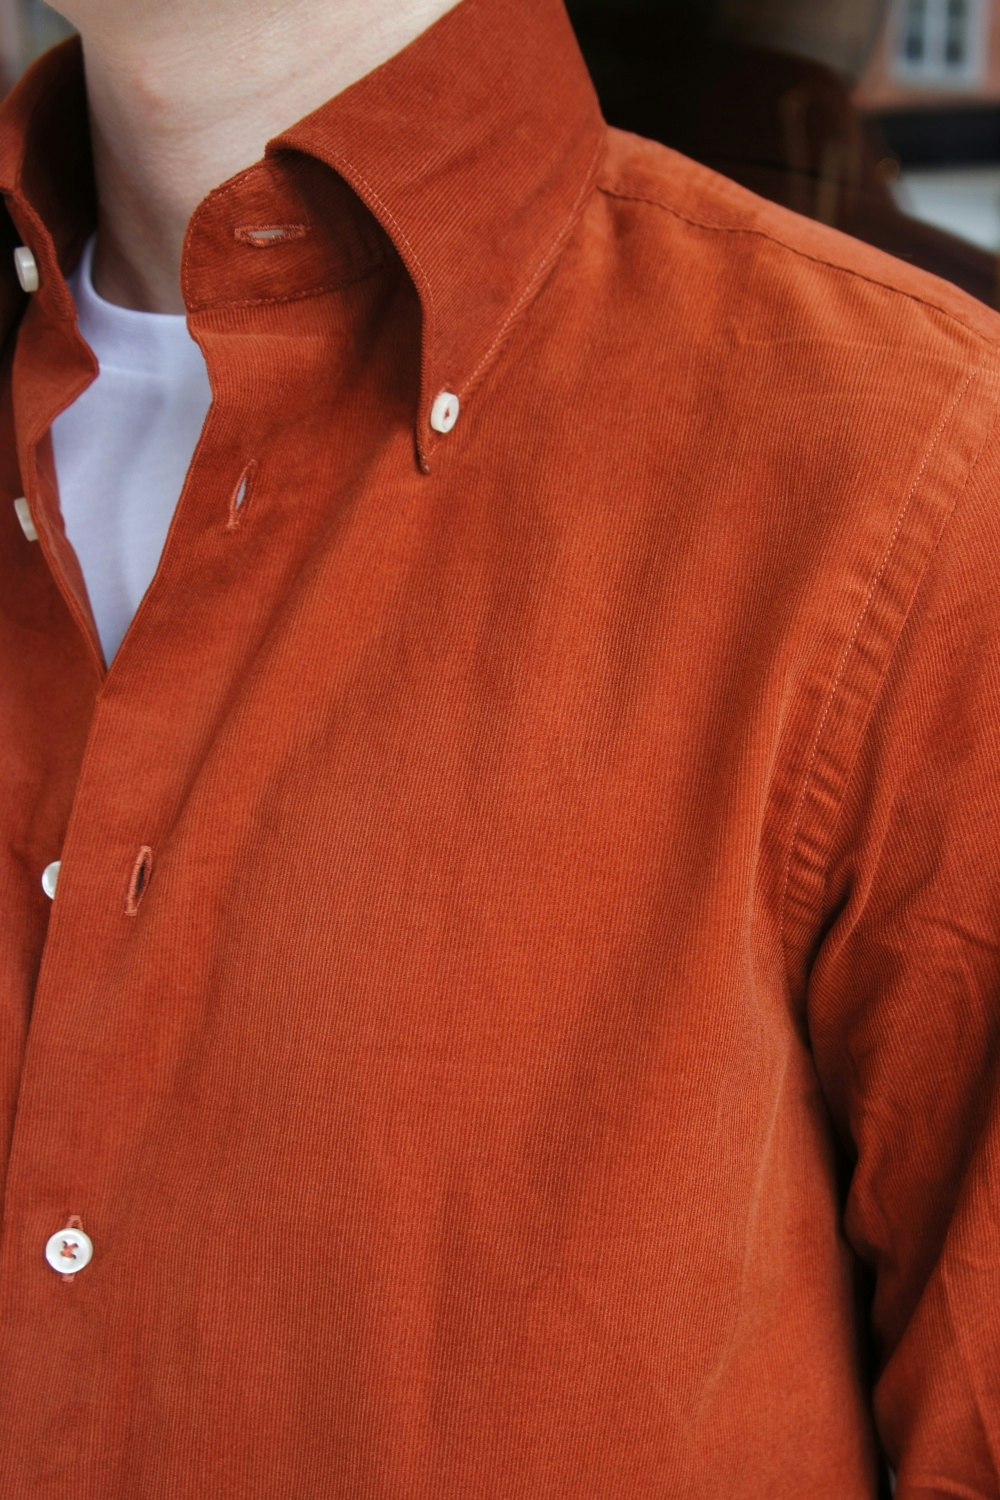 Enfärgad Babycord Skjorta - Button Down - Rost